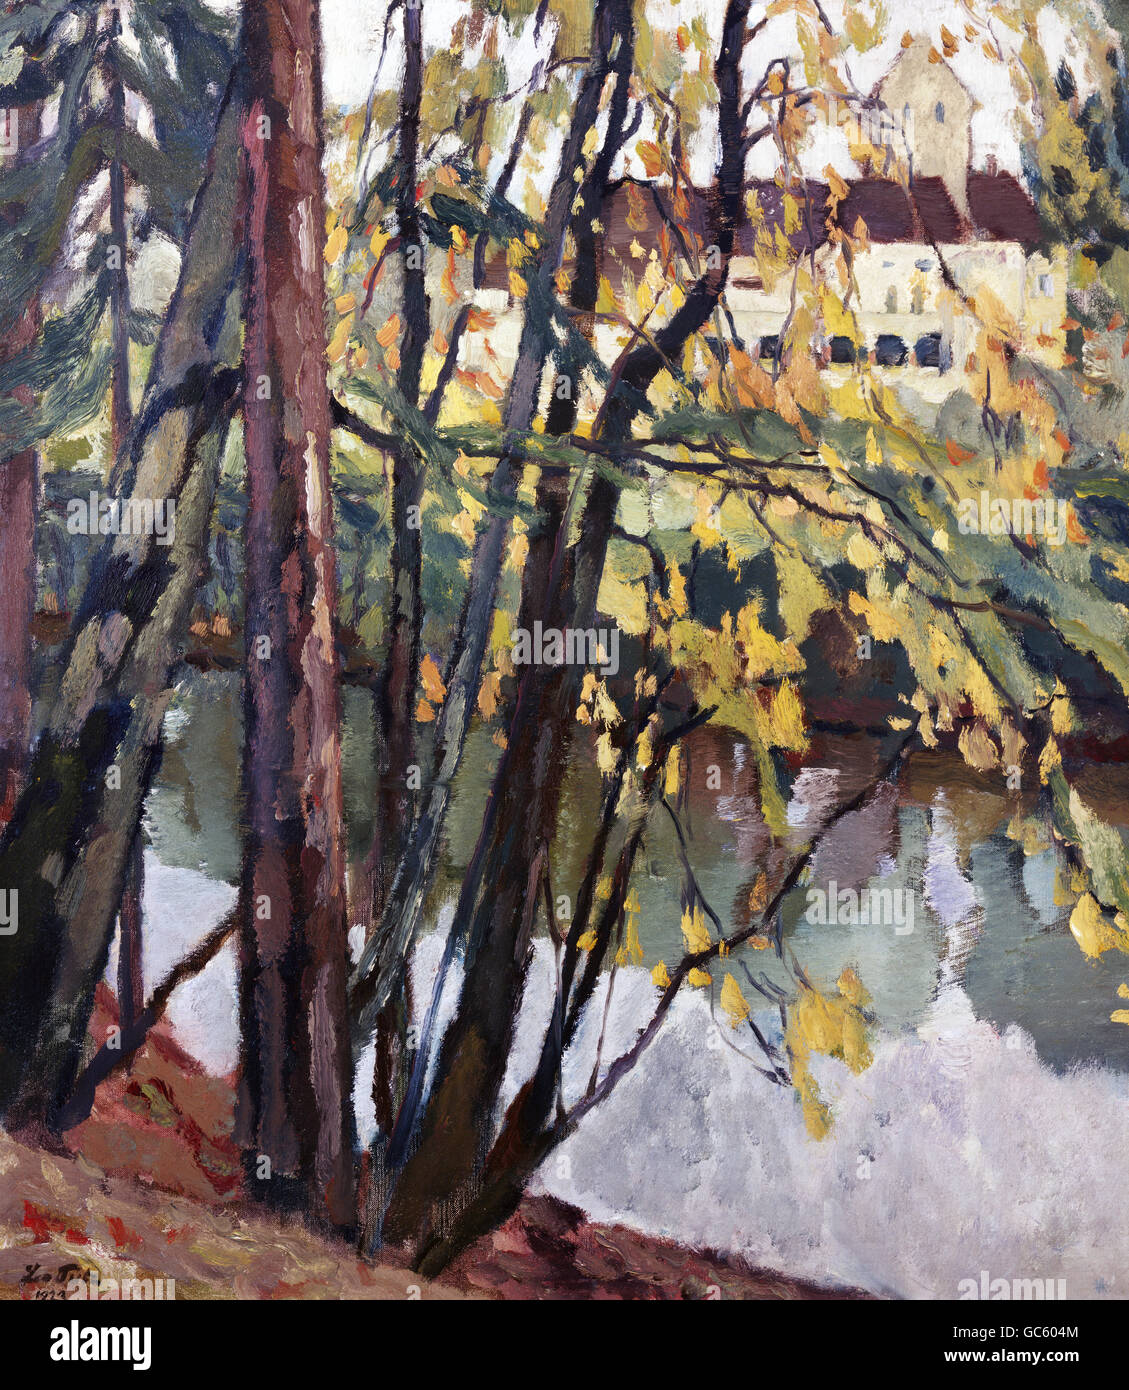 Bildende Kunst, Putz, Leo, (1869-1940), Malerei, Schloss Seefeld,  (Seefeld Schloss), Öl auf Leinwand, 84 x 74 cm, Schüller Galerie, München  Stockfotografie - Alamy